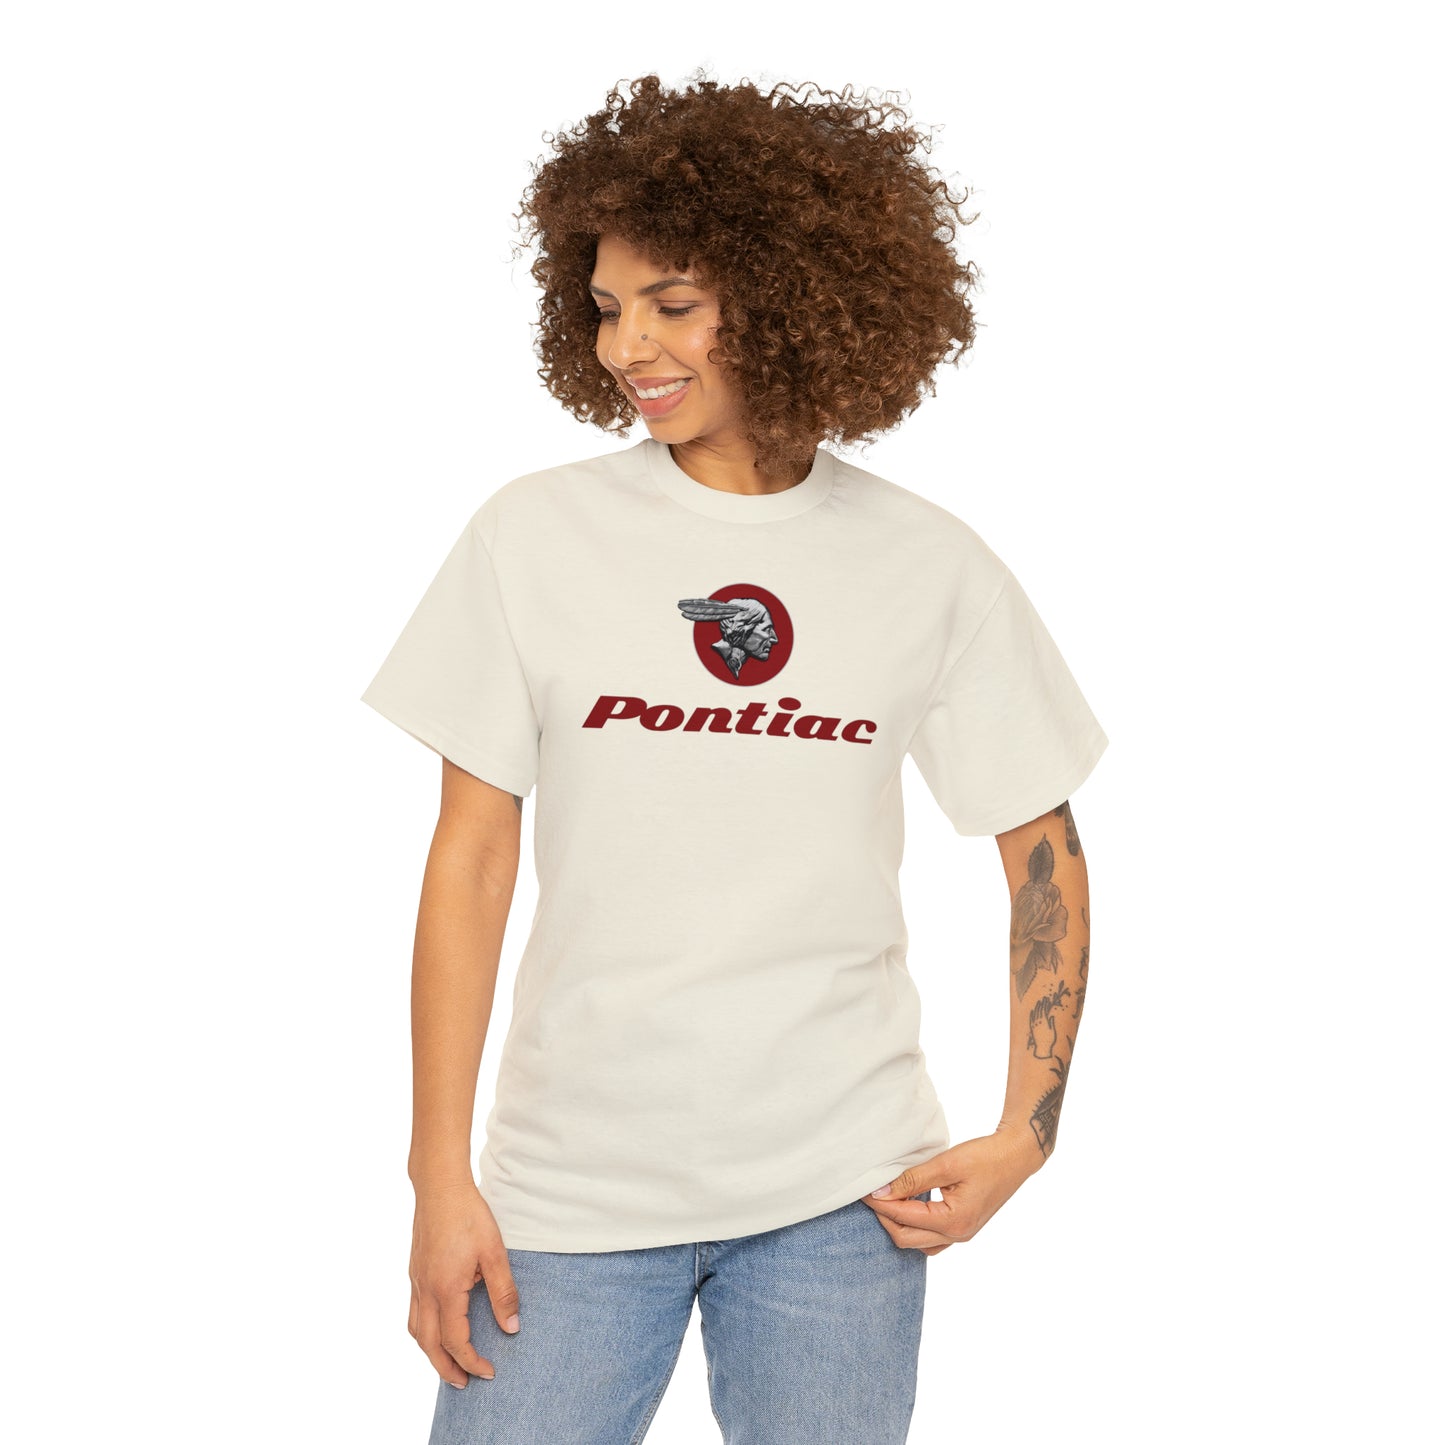 Pontiac T-Shirt